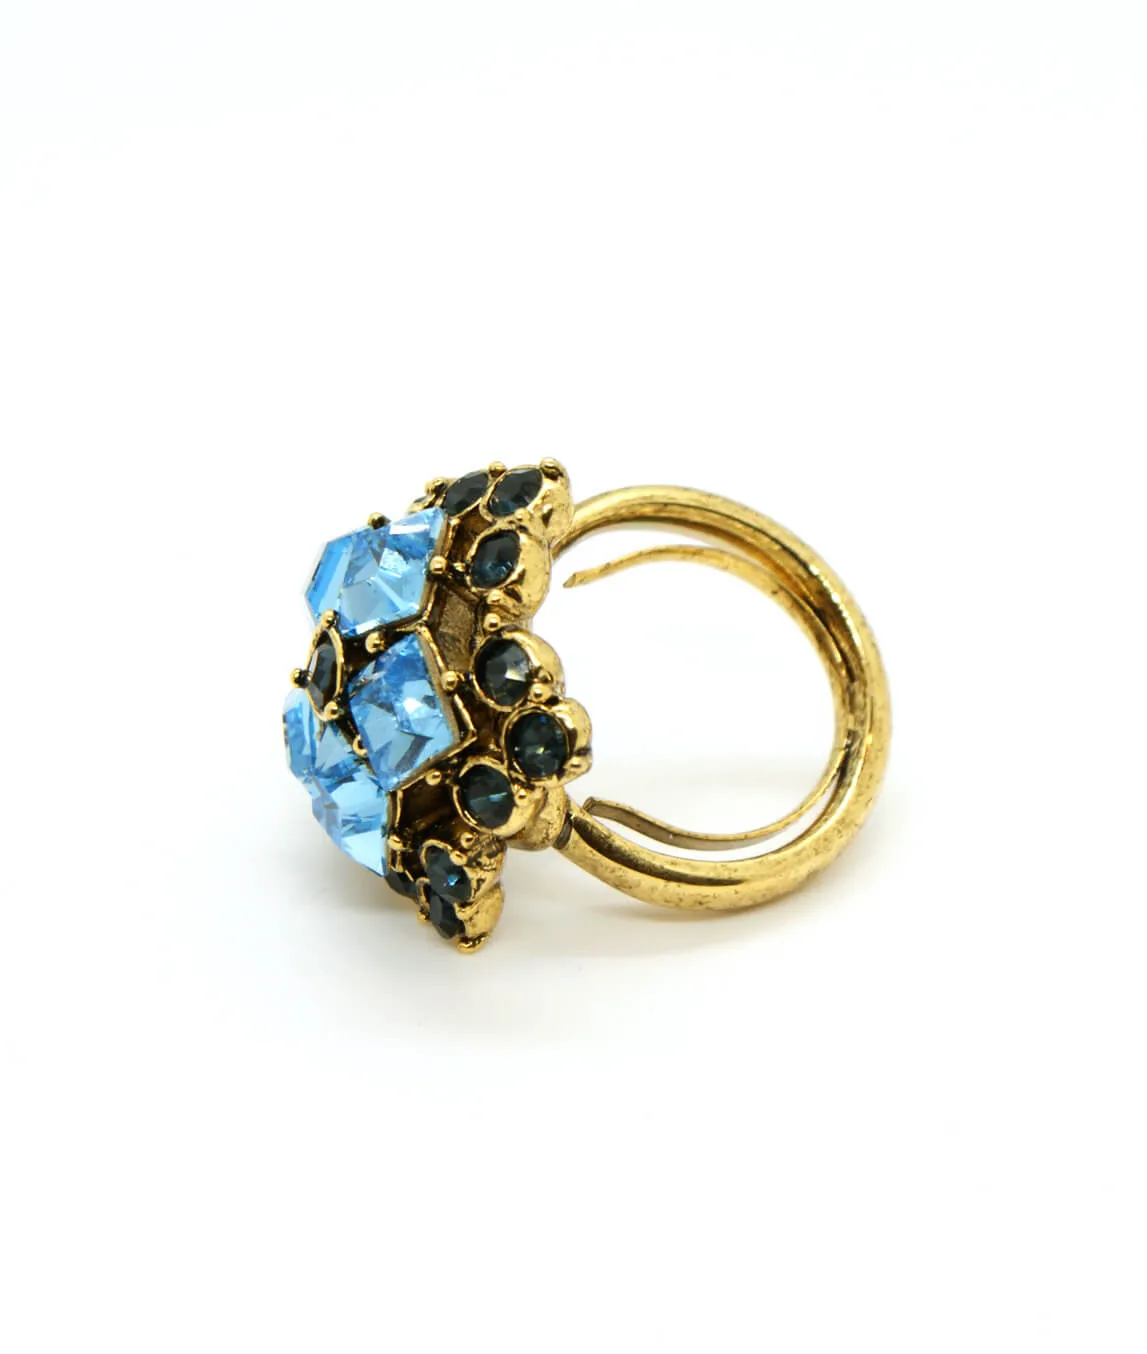 Blue Hollycraft dress ring